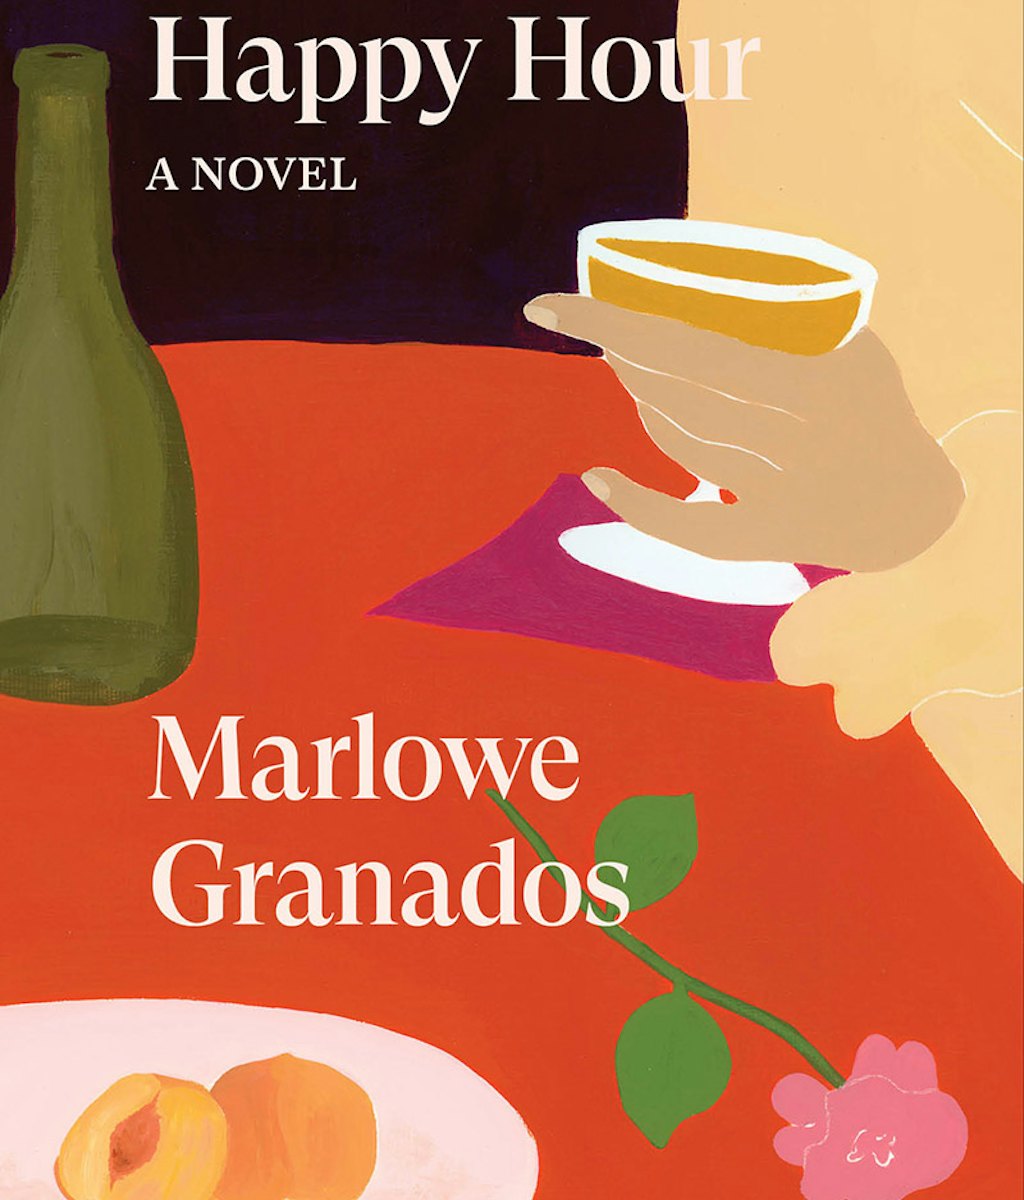 Happy Hour: A Novel by Marlowe Granados